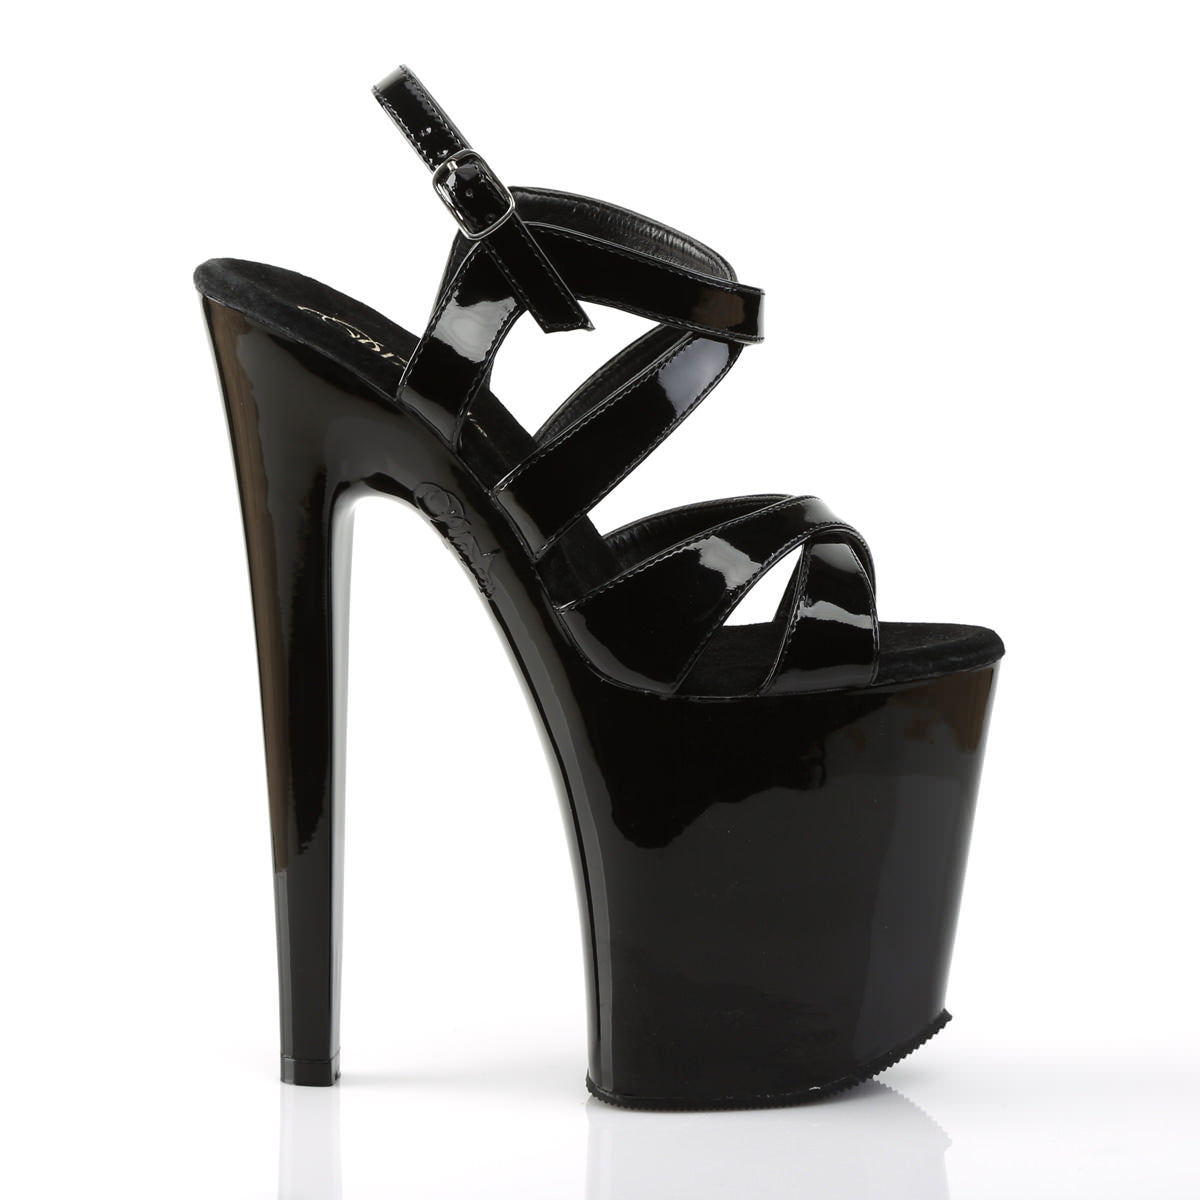 8 Inch Heel XTREME-872 Black Patent